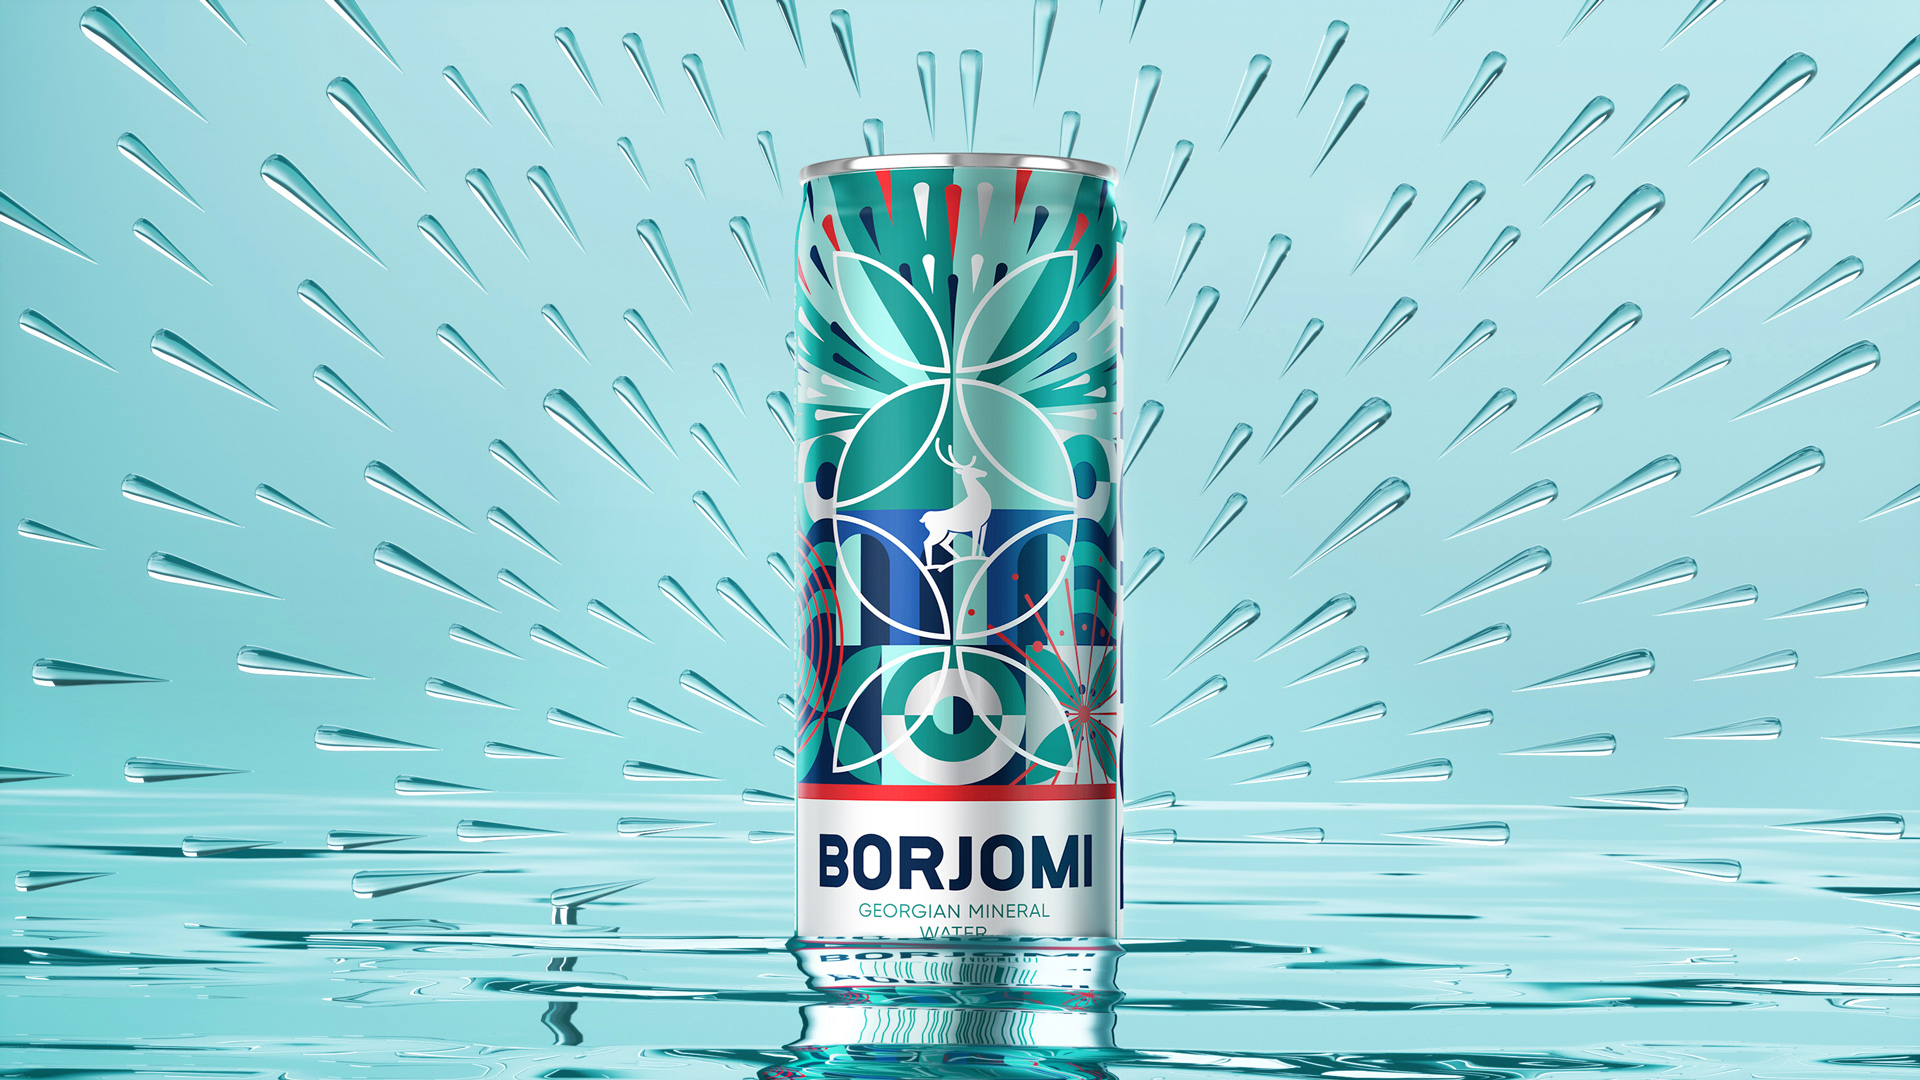 Borjomi Limited Edition 2021